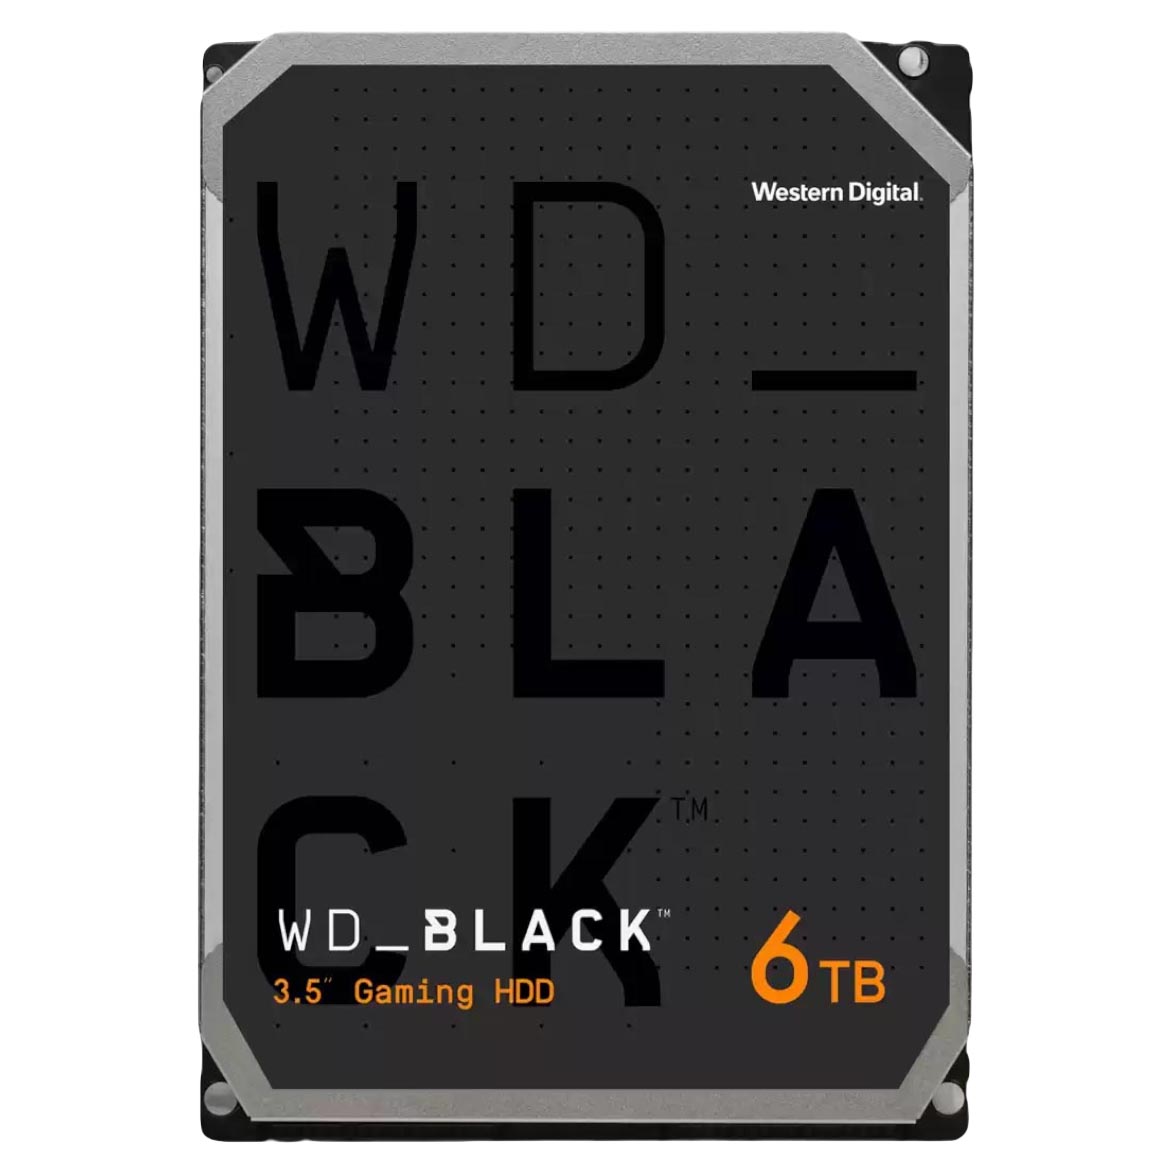 Внутренний жесткий диск Western Digital WD Black Gaming, WD6004FZWX, 6 Тб внутренний жесткий диск western digital gold 3 5 8 тб wd8004fryz